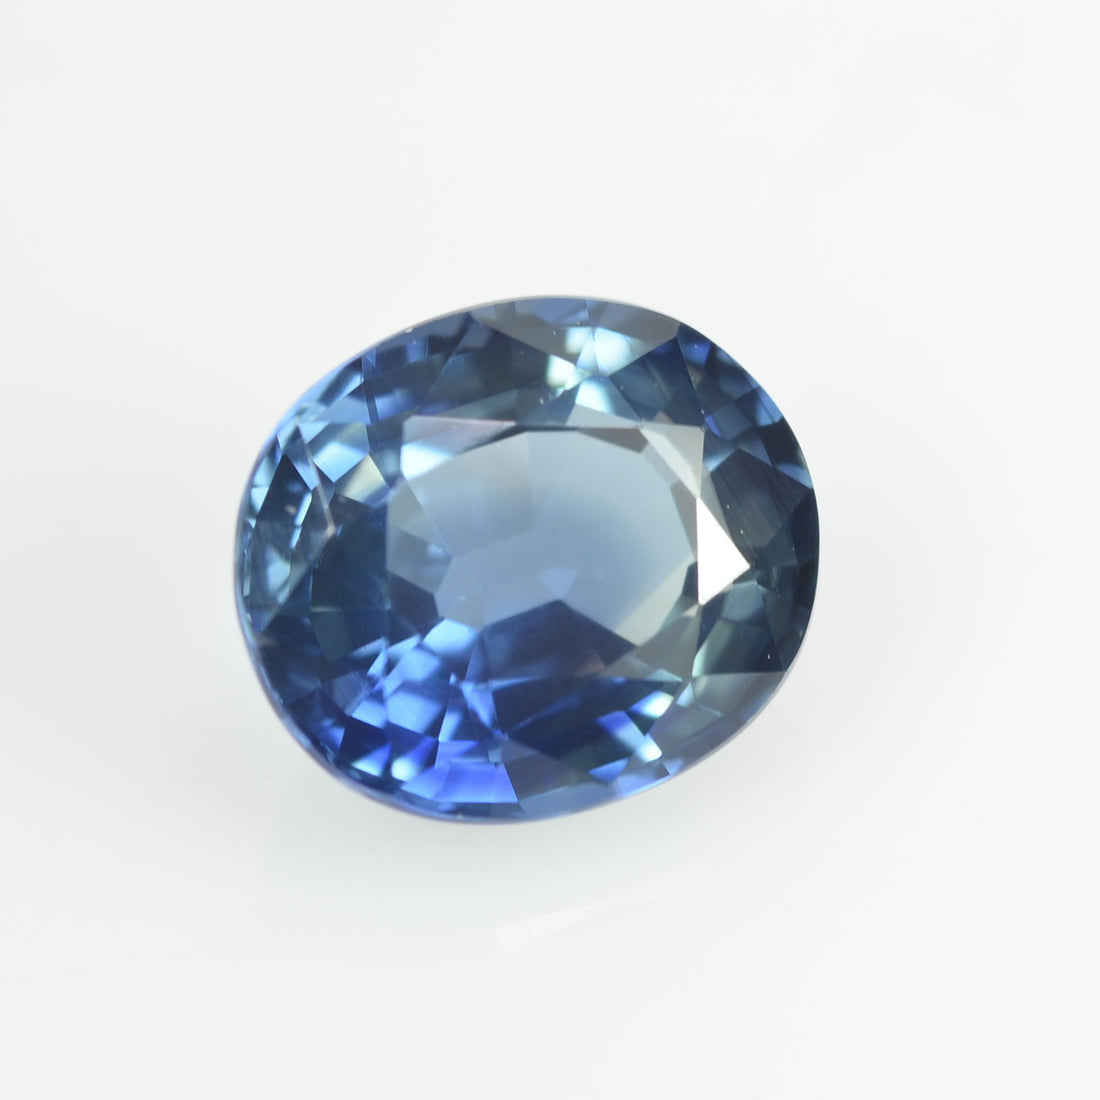 1.23 cts Natural Teal Blue Green Sapphire Loose Gemstone Oval Cut - Thai Gems Export Ltd.